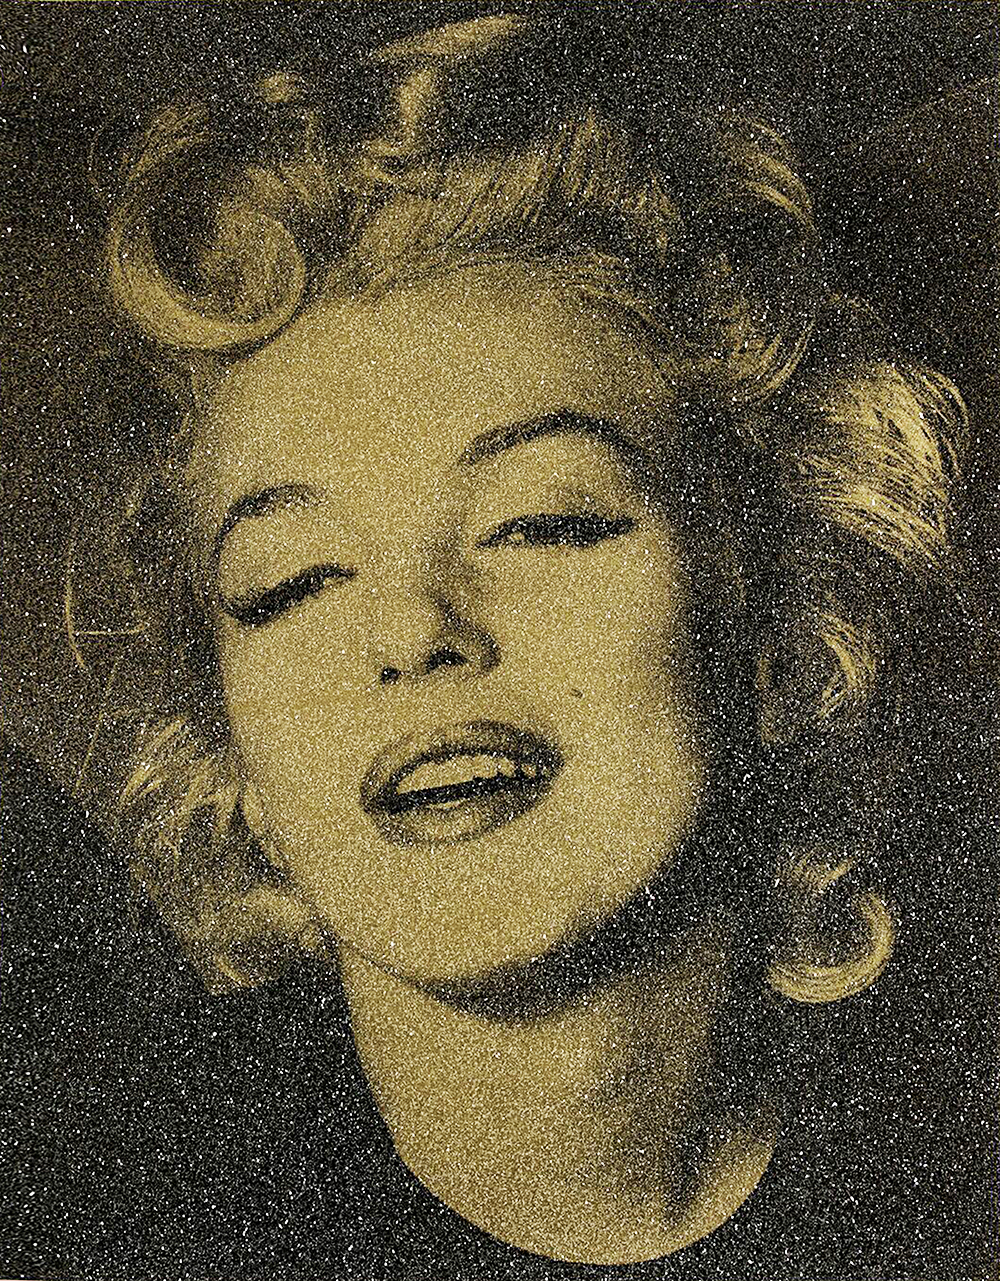 Russell Young (British/American, b. 1959-), 'Marilyn Hope Liquid Gold and Black,' 2013, acrylic paint, enamel screenprint, estimate £4,000-£6,000. Image courtesy of Roseberys